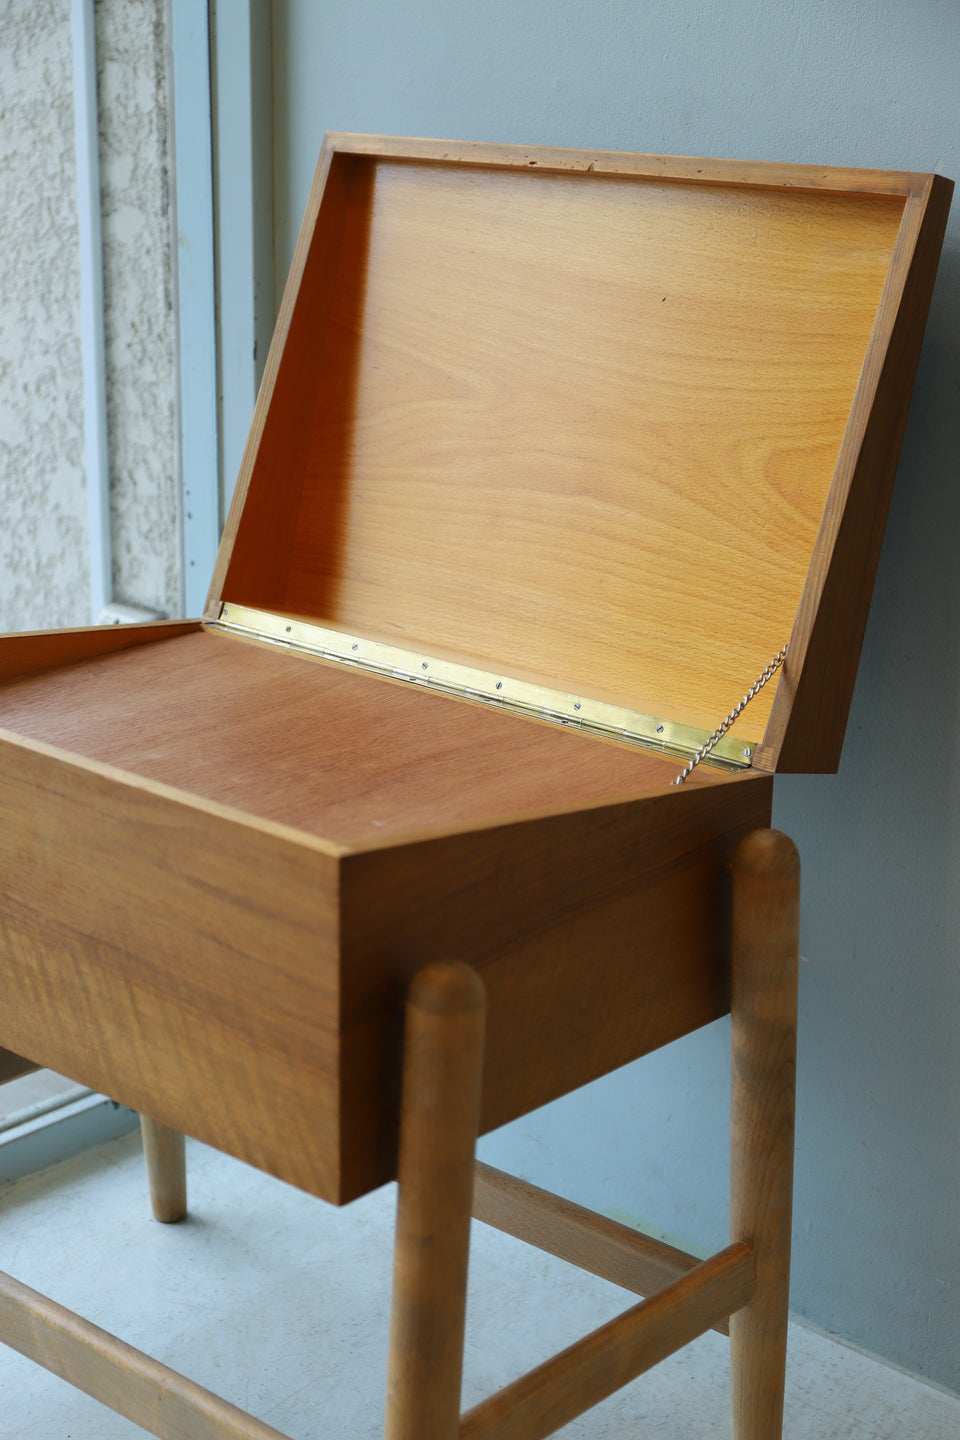 Sewing Box Table Danish Vintage/デンマークヴィンテージ ソーイングボックス テーブル 収納 北欧家具